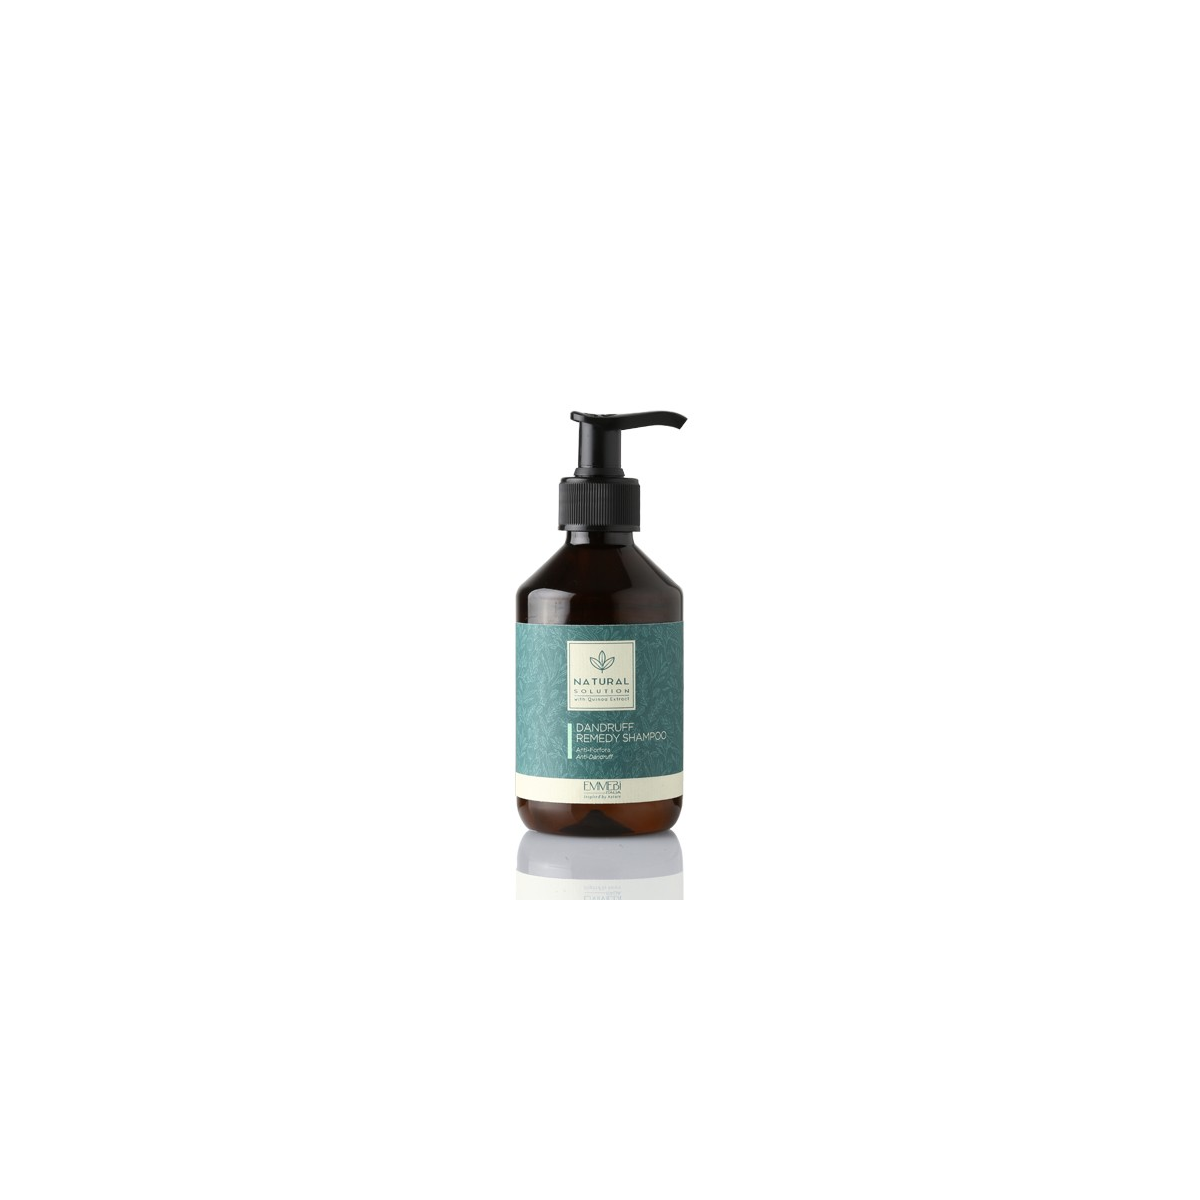 EMMEBI ITALIA - NATURAL SOLUTION - DANDRUFF REMEDY SHAMPOO (250ml) Shampoo anti forfora